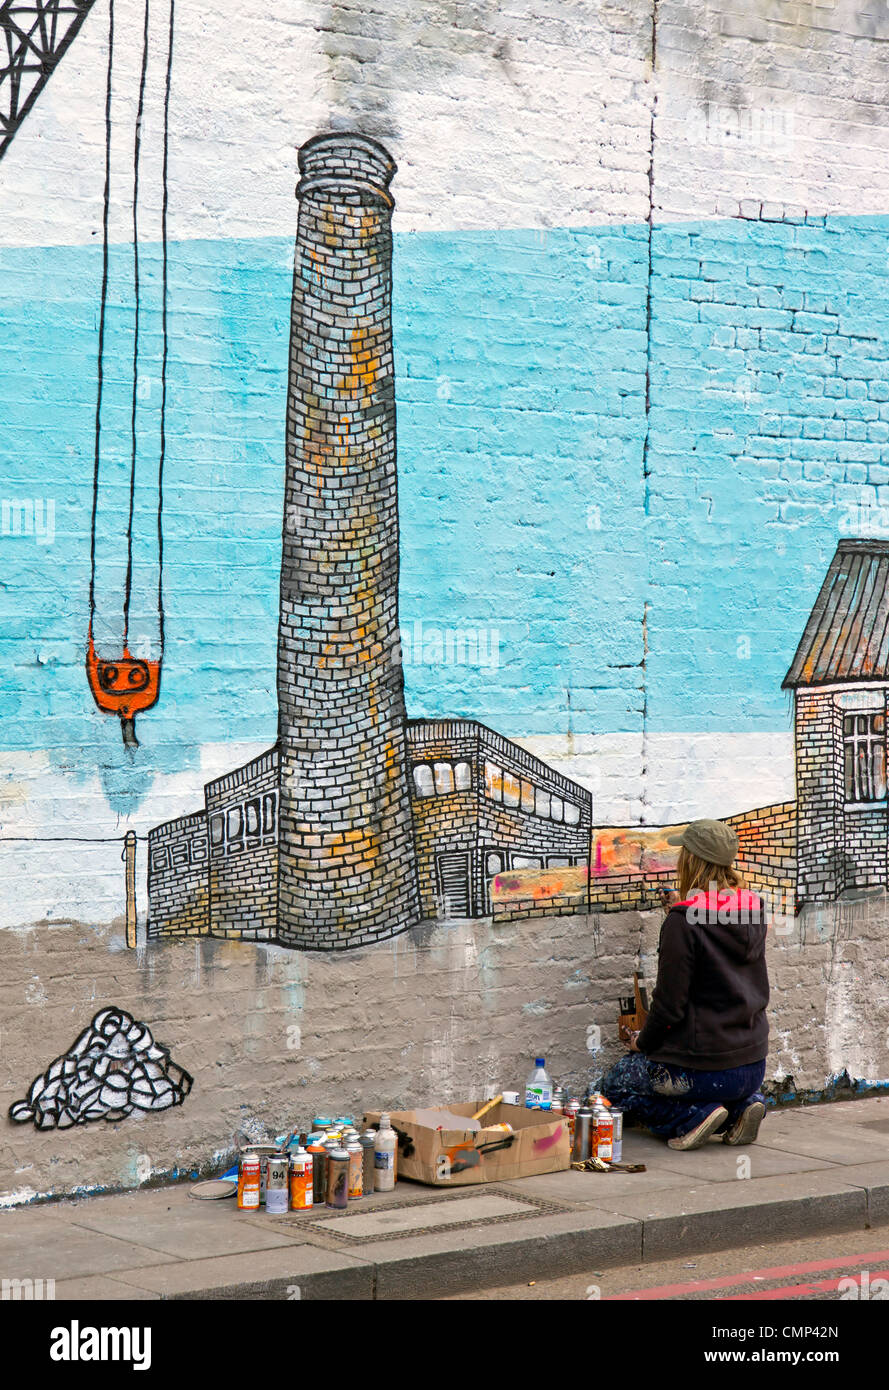 Artista callejero en Shoreditch Londres Foto de stock